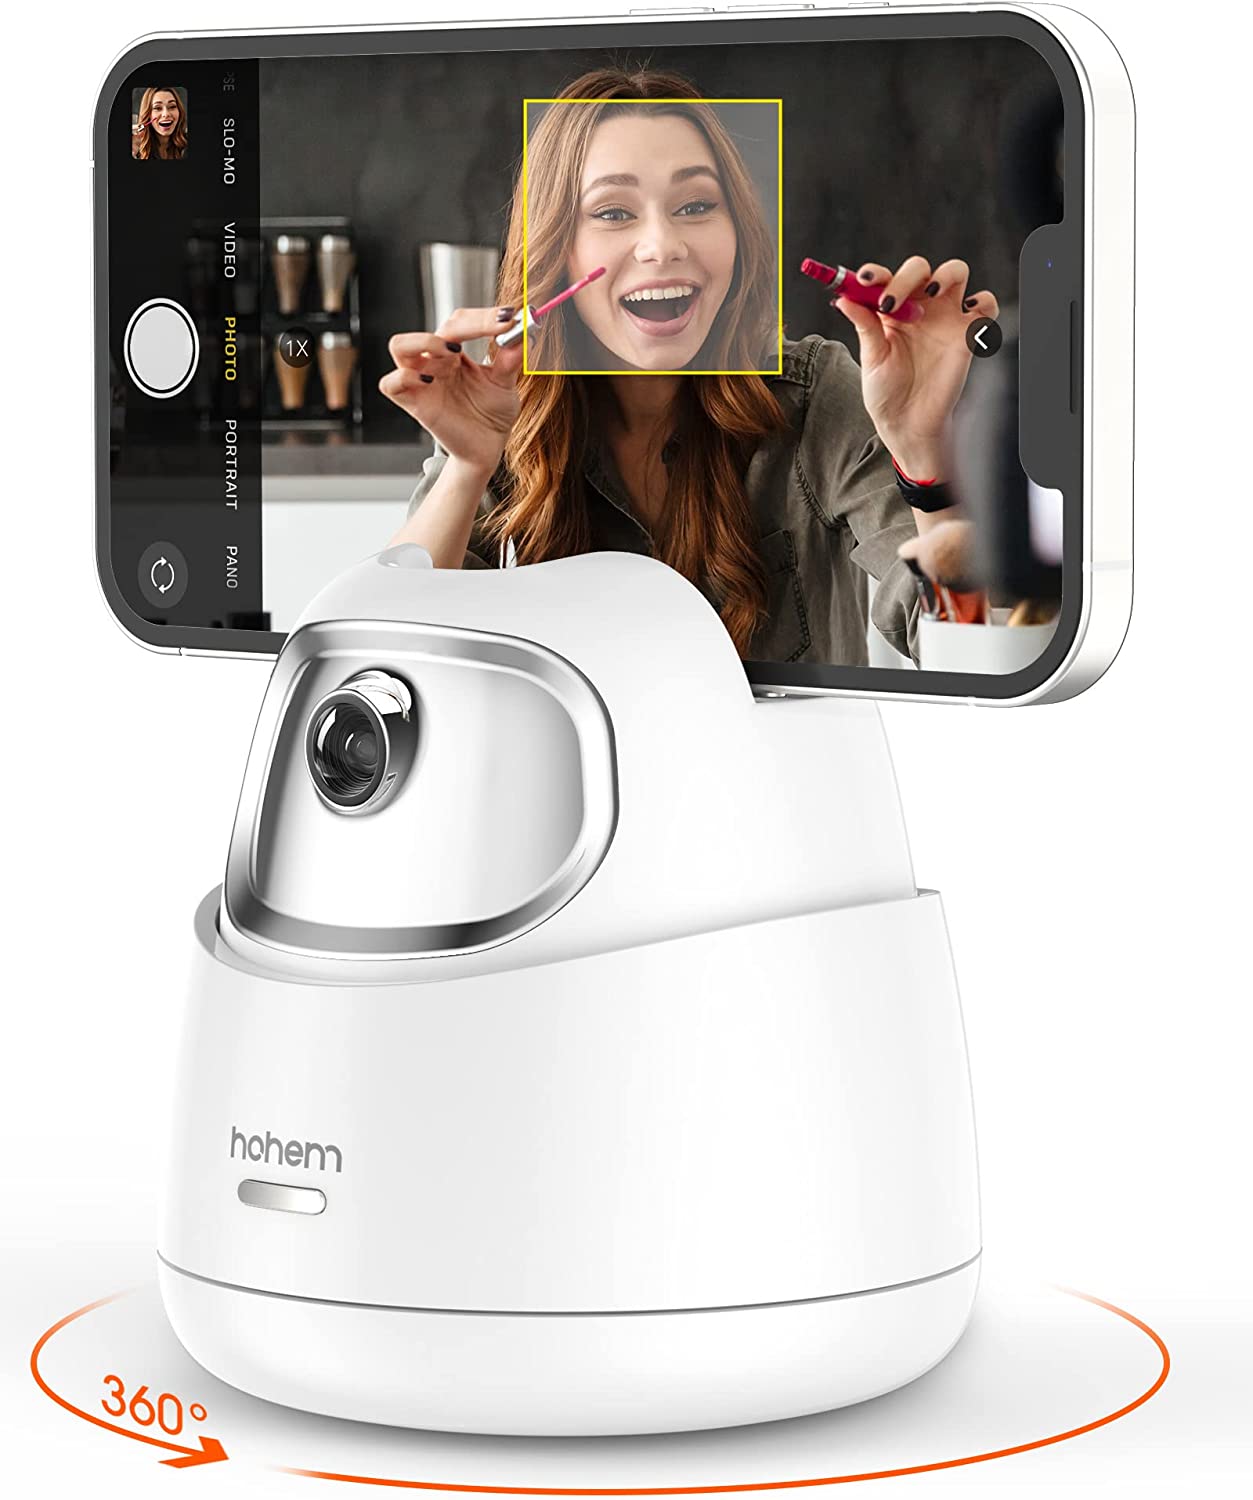 Hohem GO - Auto Face Tracking Selfie Stand